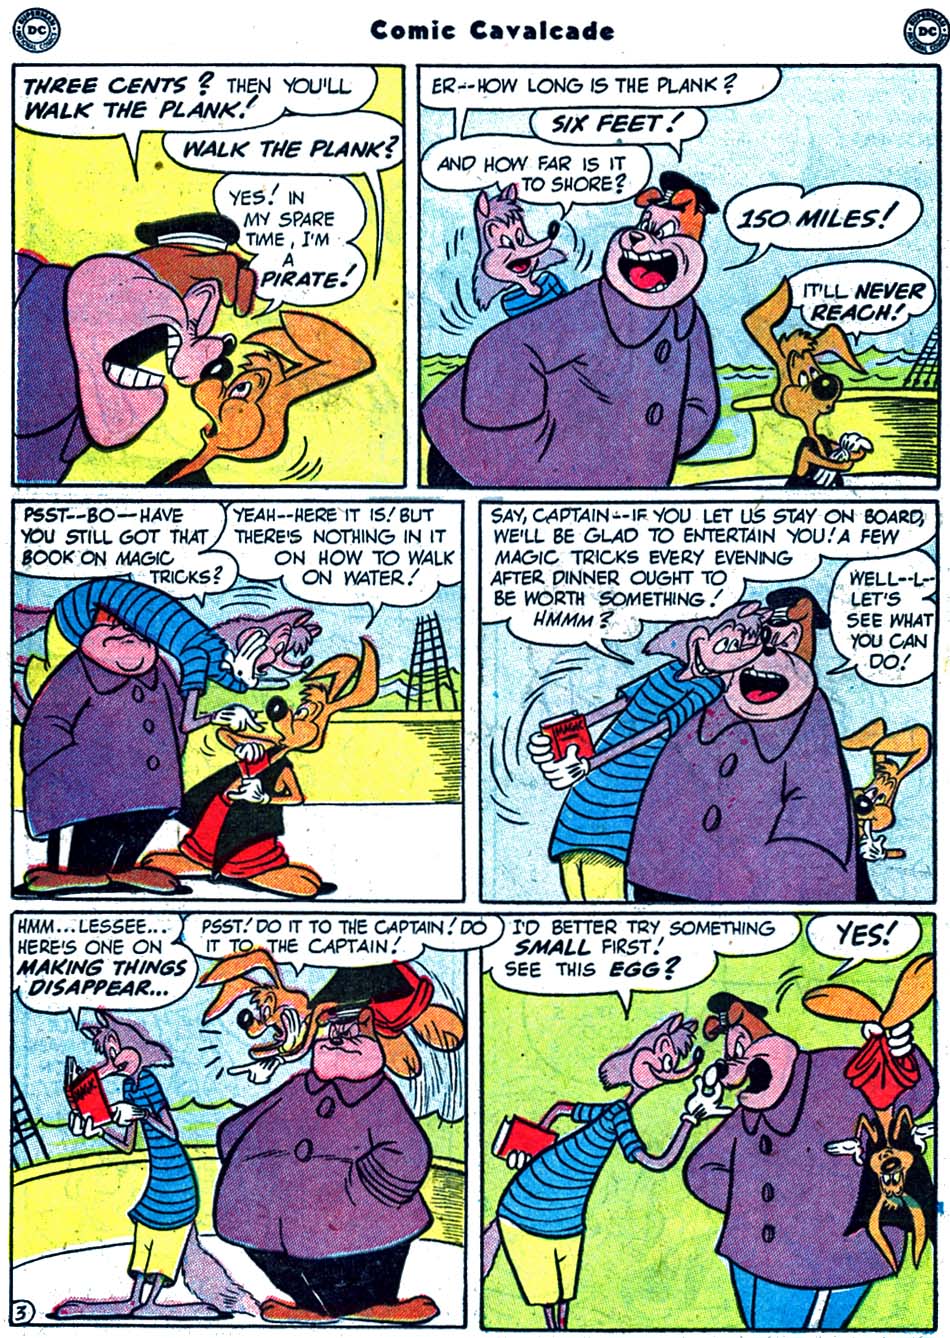 Comic Cavalcade issue 44 - Page 50